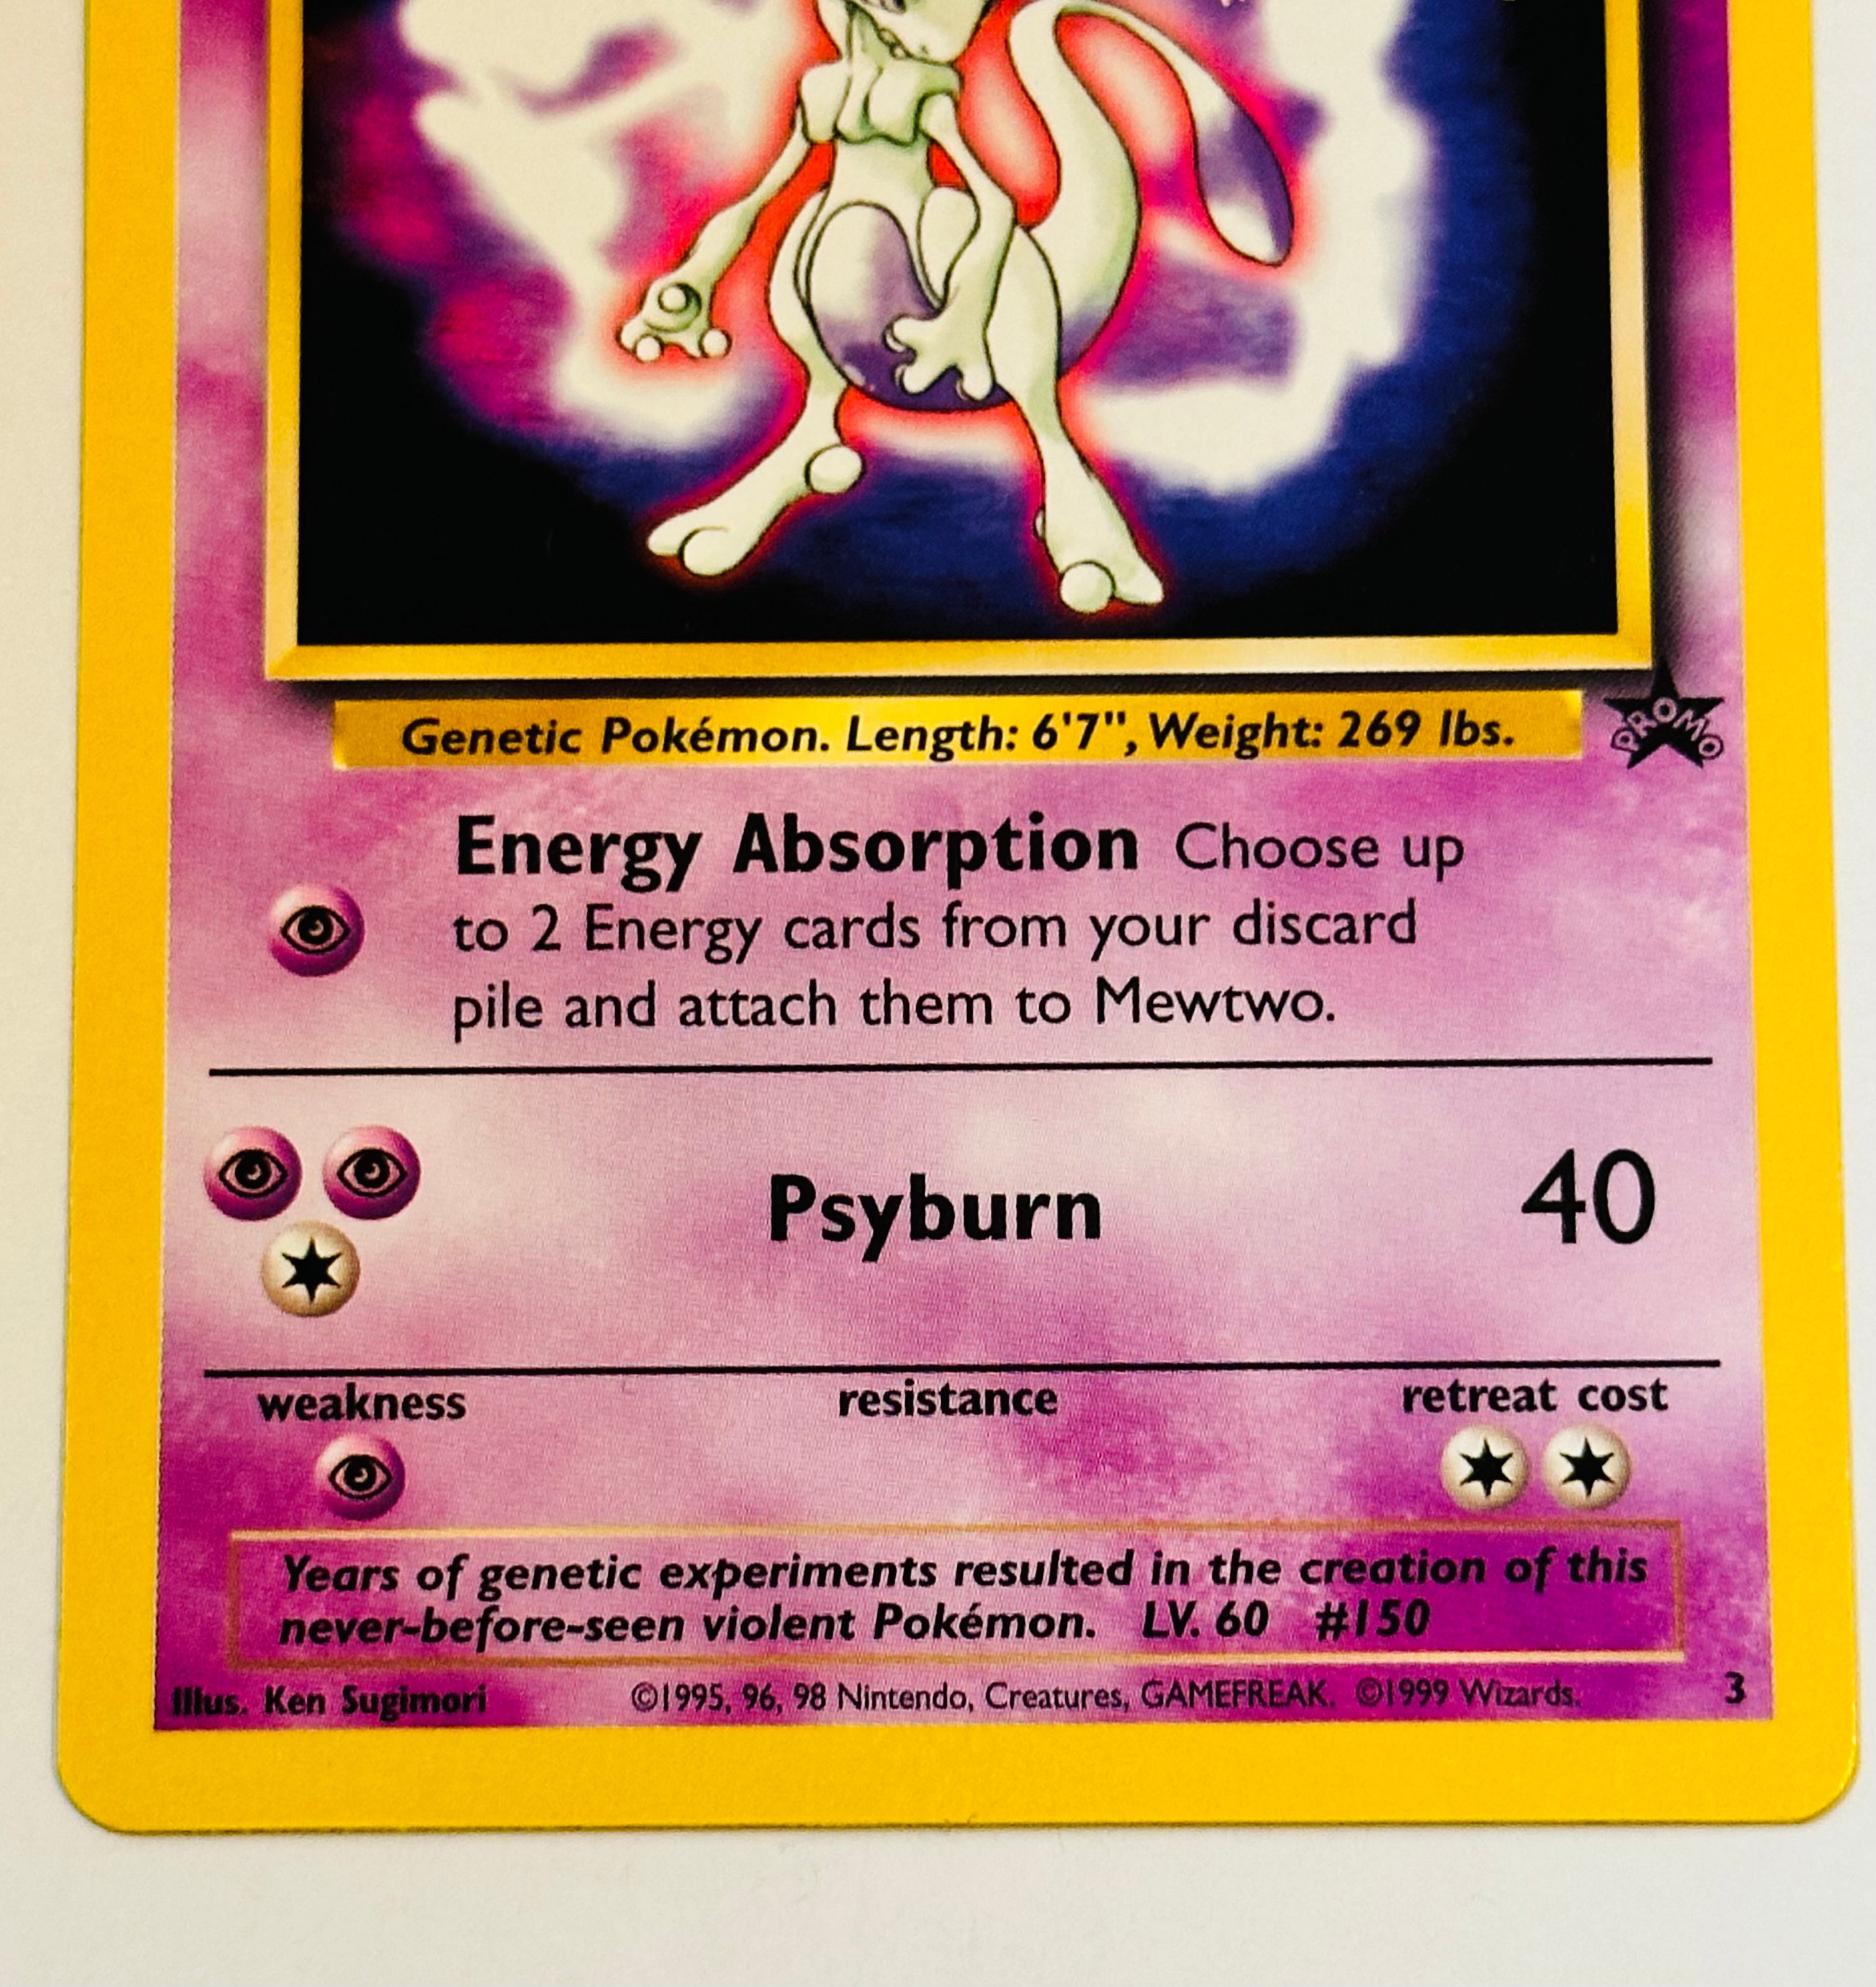 Pokémon Mewtwo rare Pokémon card 1999